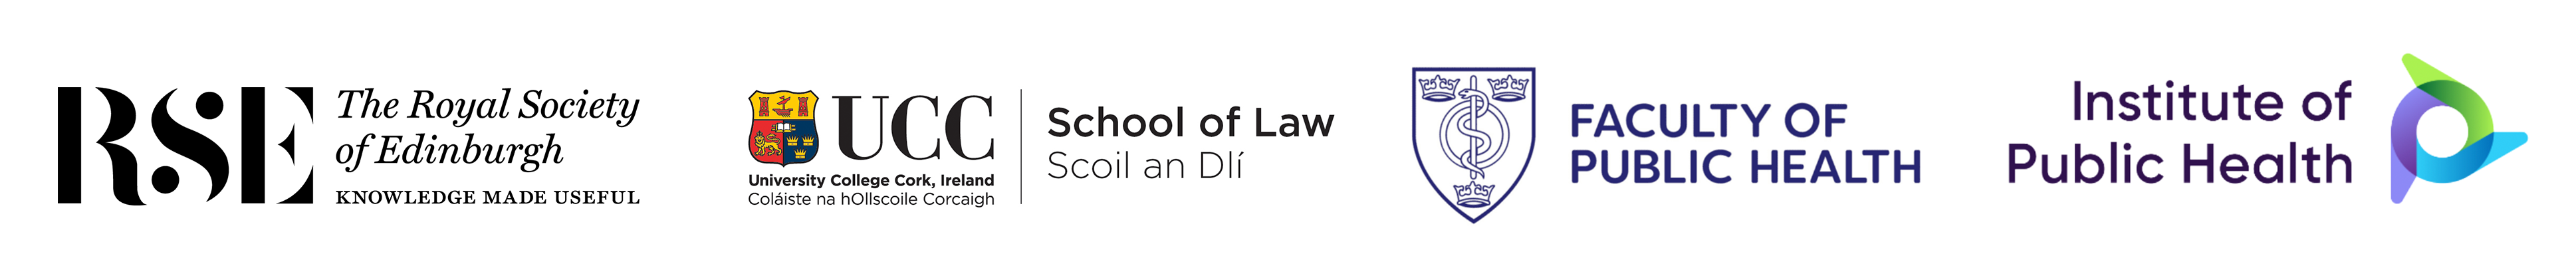 Logos for Royal Society of Edinburgh, University College Cork School of Law, UK Faculty of Public Health, Institute of Public Health Ireland